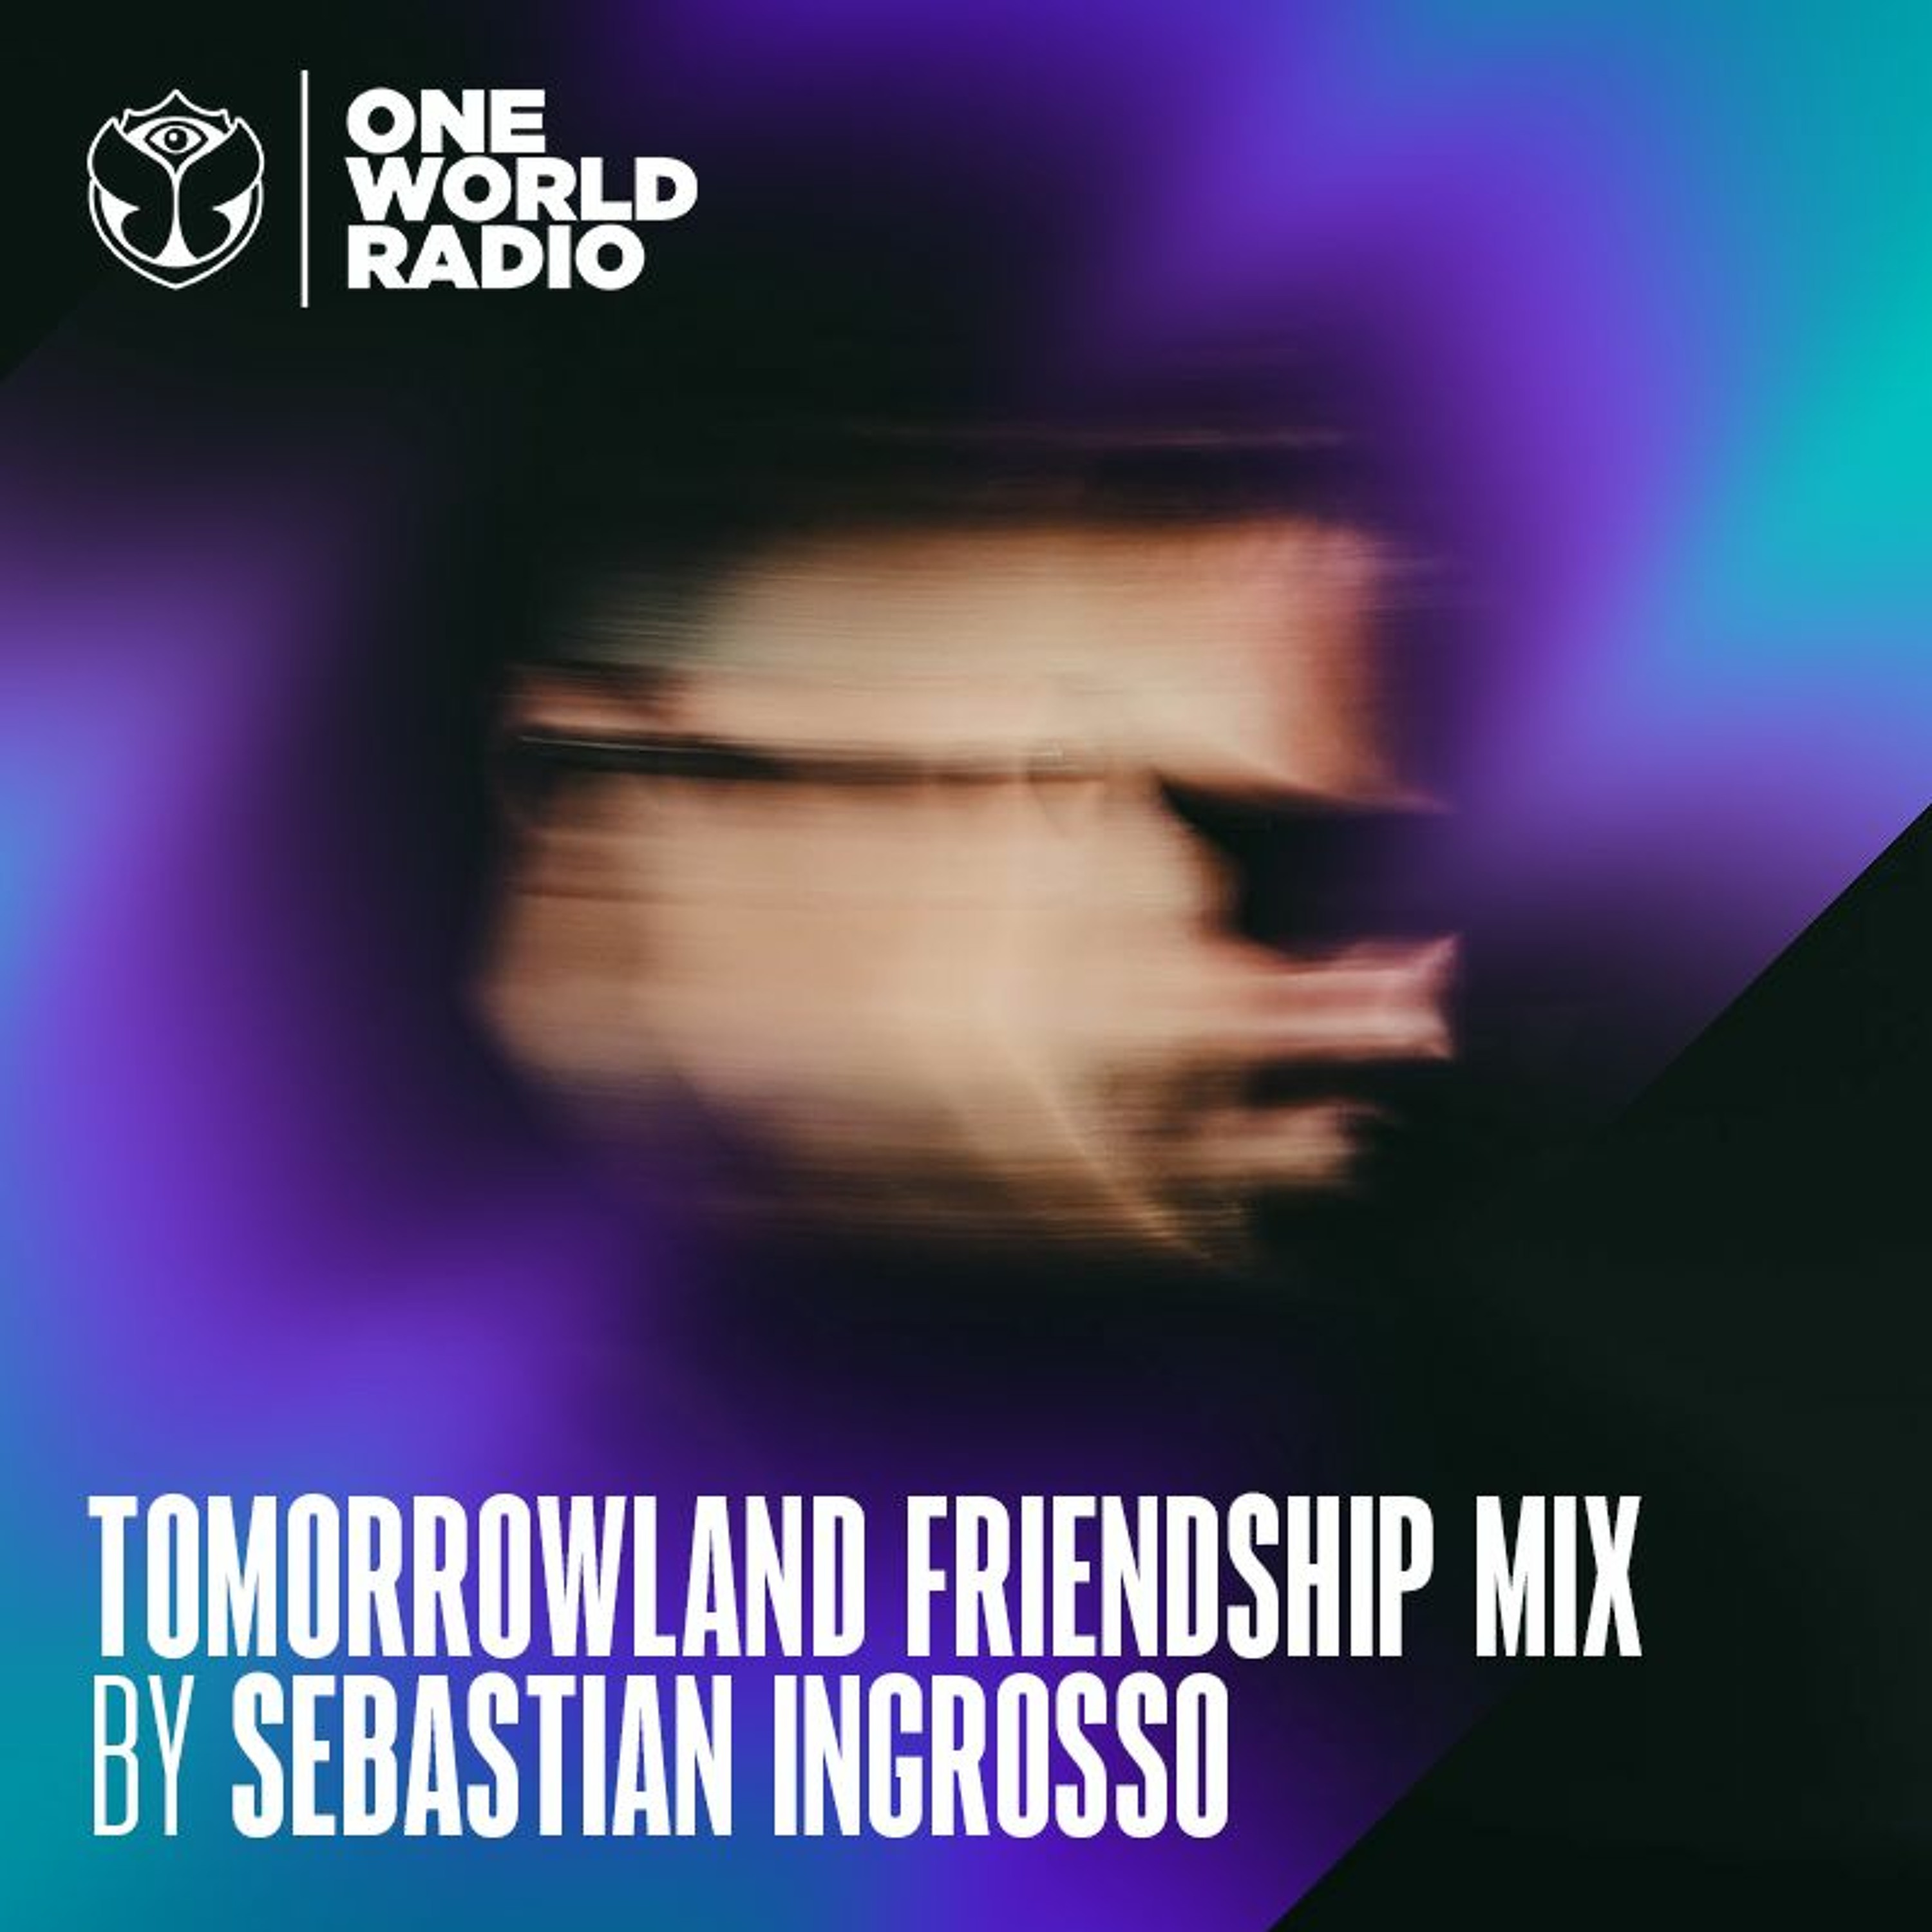 Tomorrowland Friendship Mix by Sebastian Ingrosso